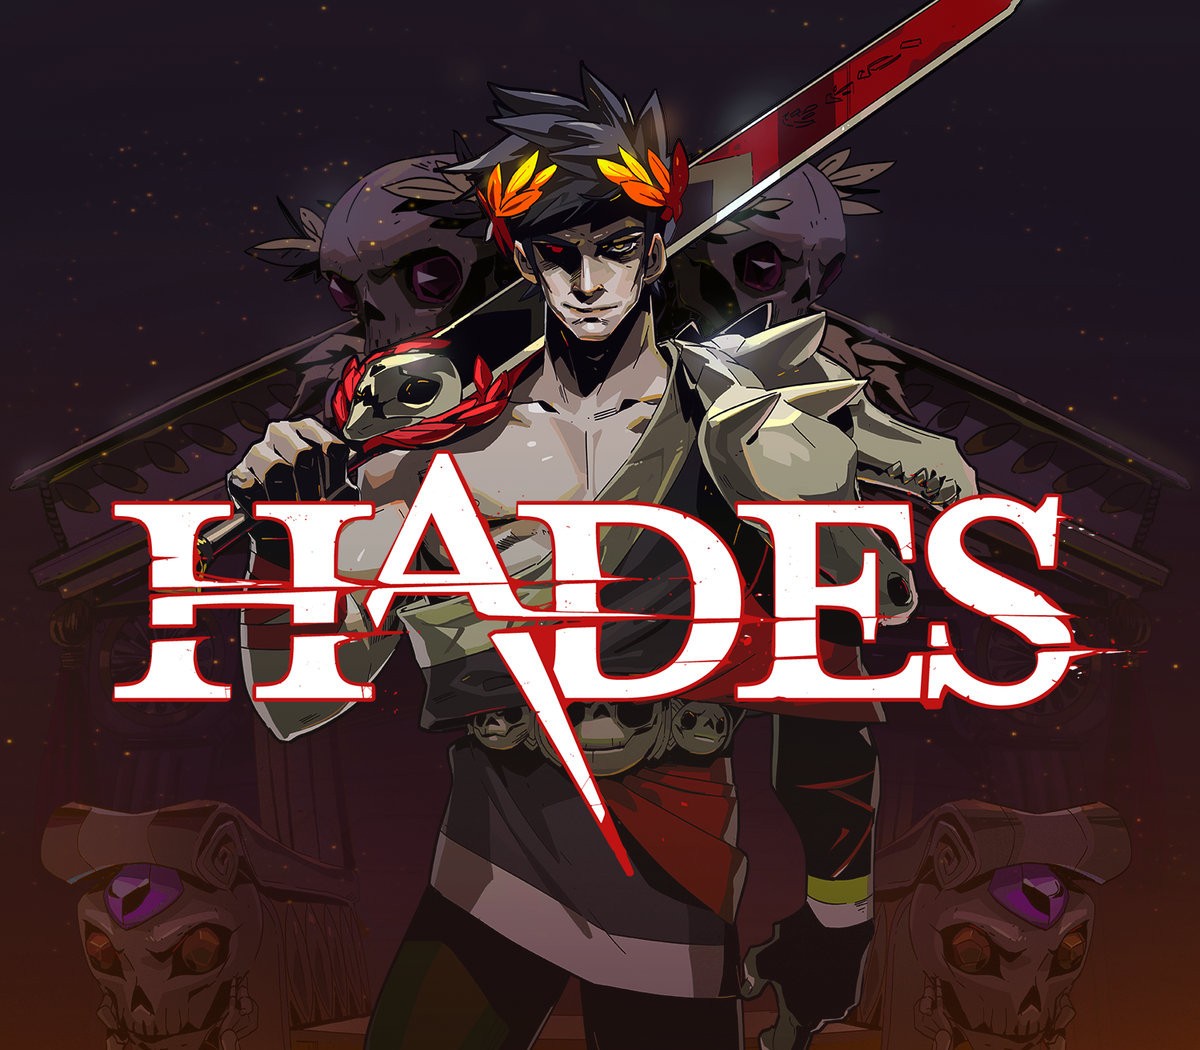 Hades (Nintendo Switch Digital Download)